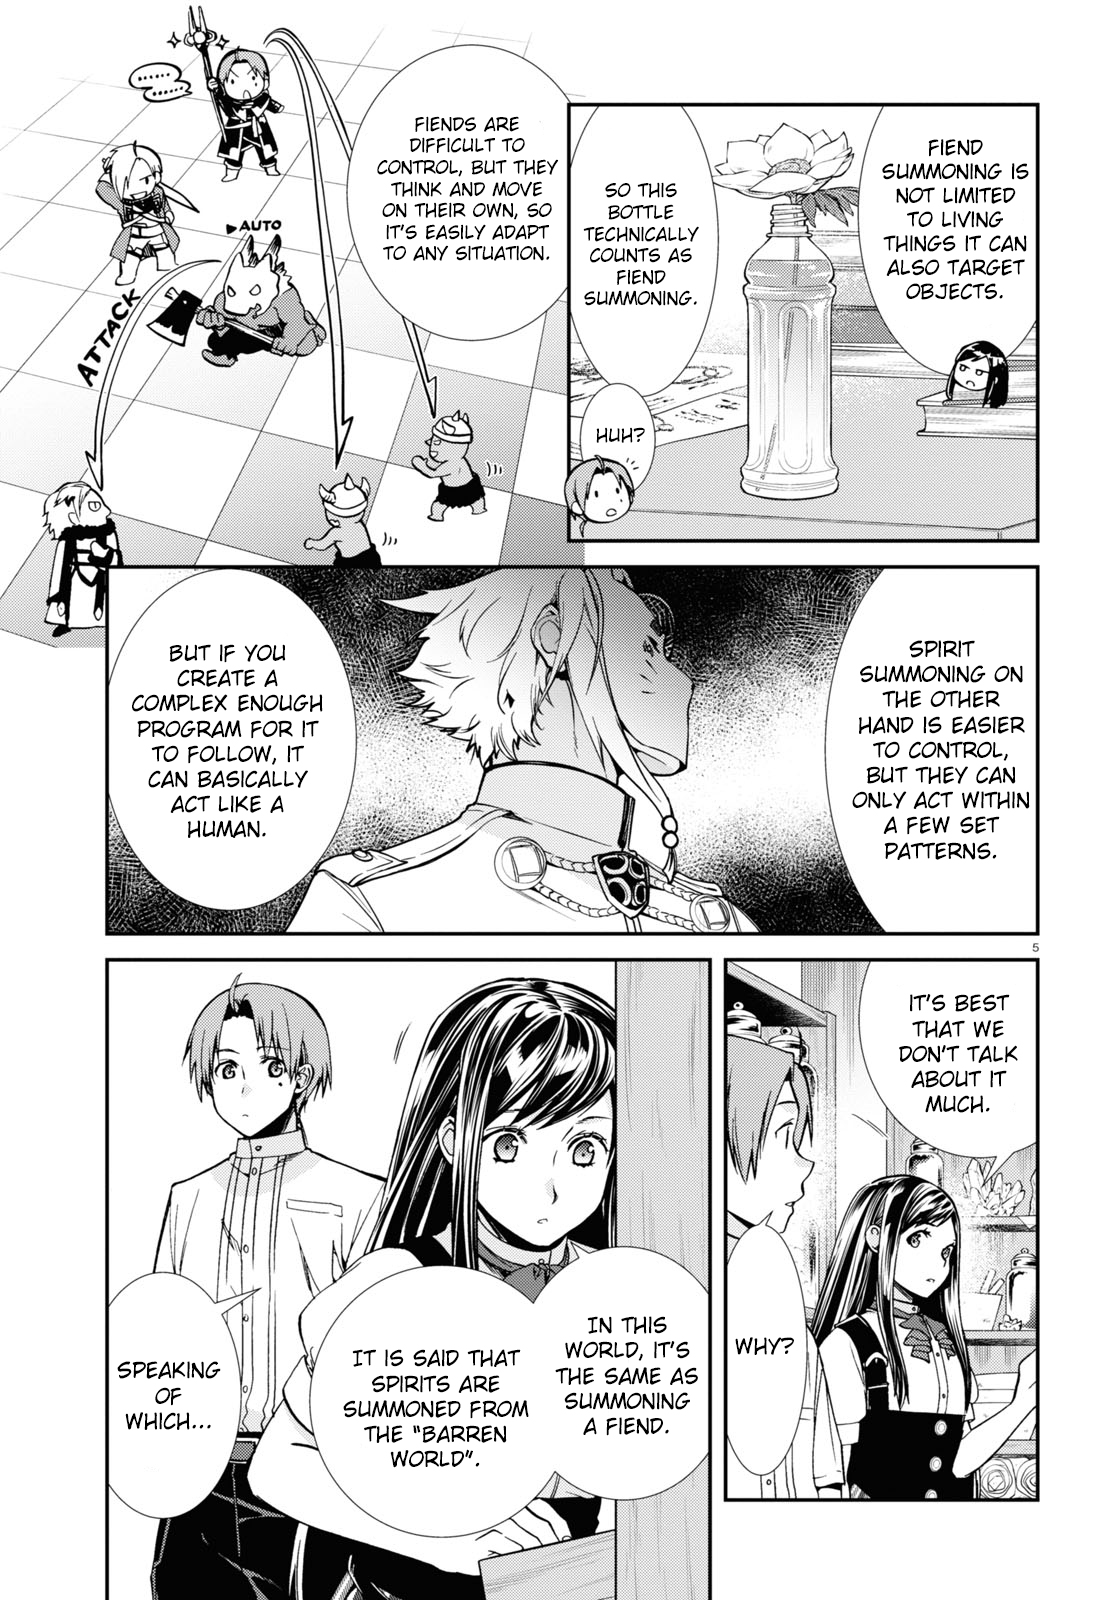 Light Novel Volume 2, Mushoku Tensei Wiki